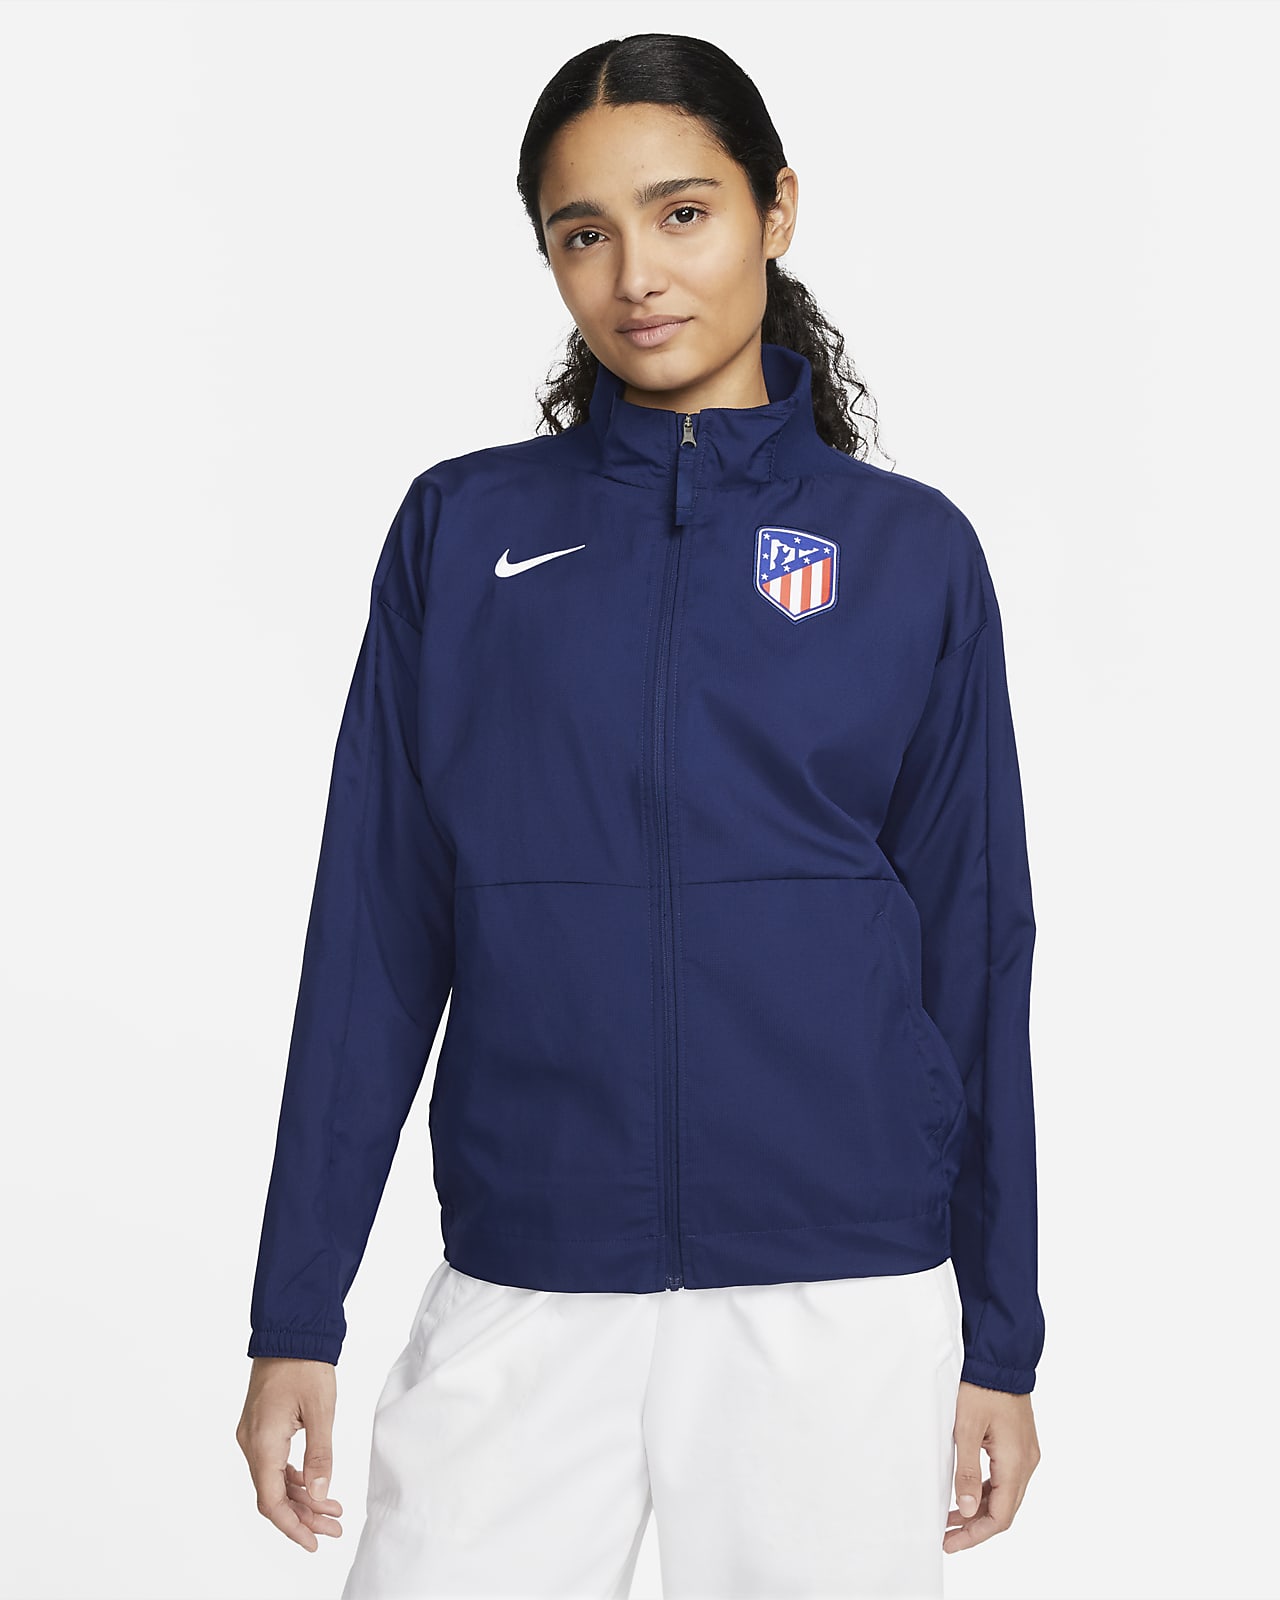 Atlético Madrid Women's Nike Dri-FIT Football Jacket